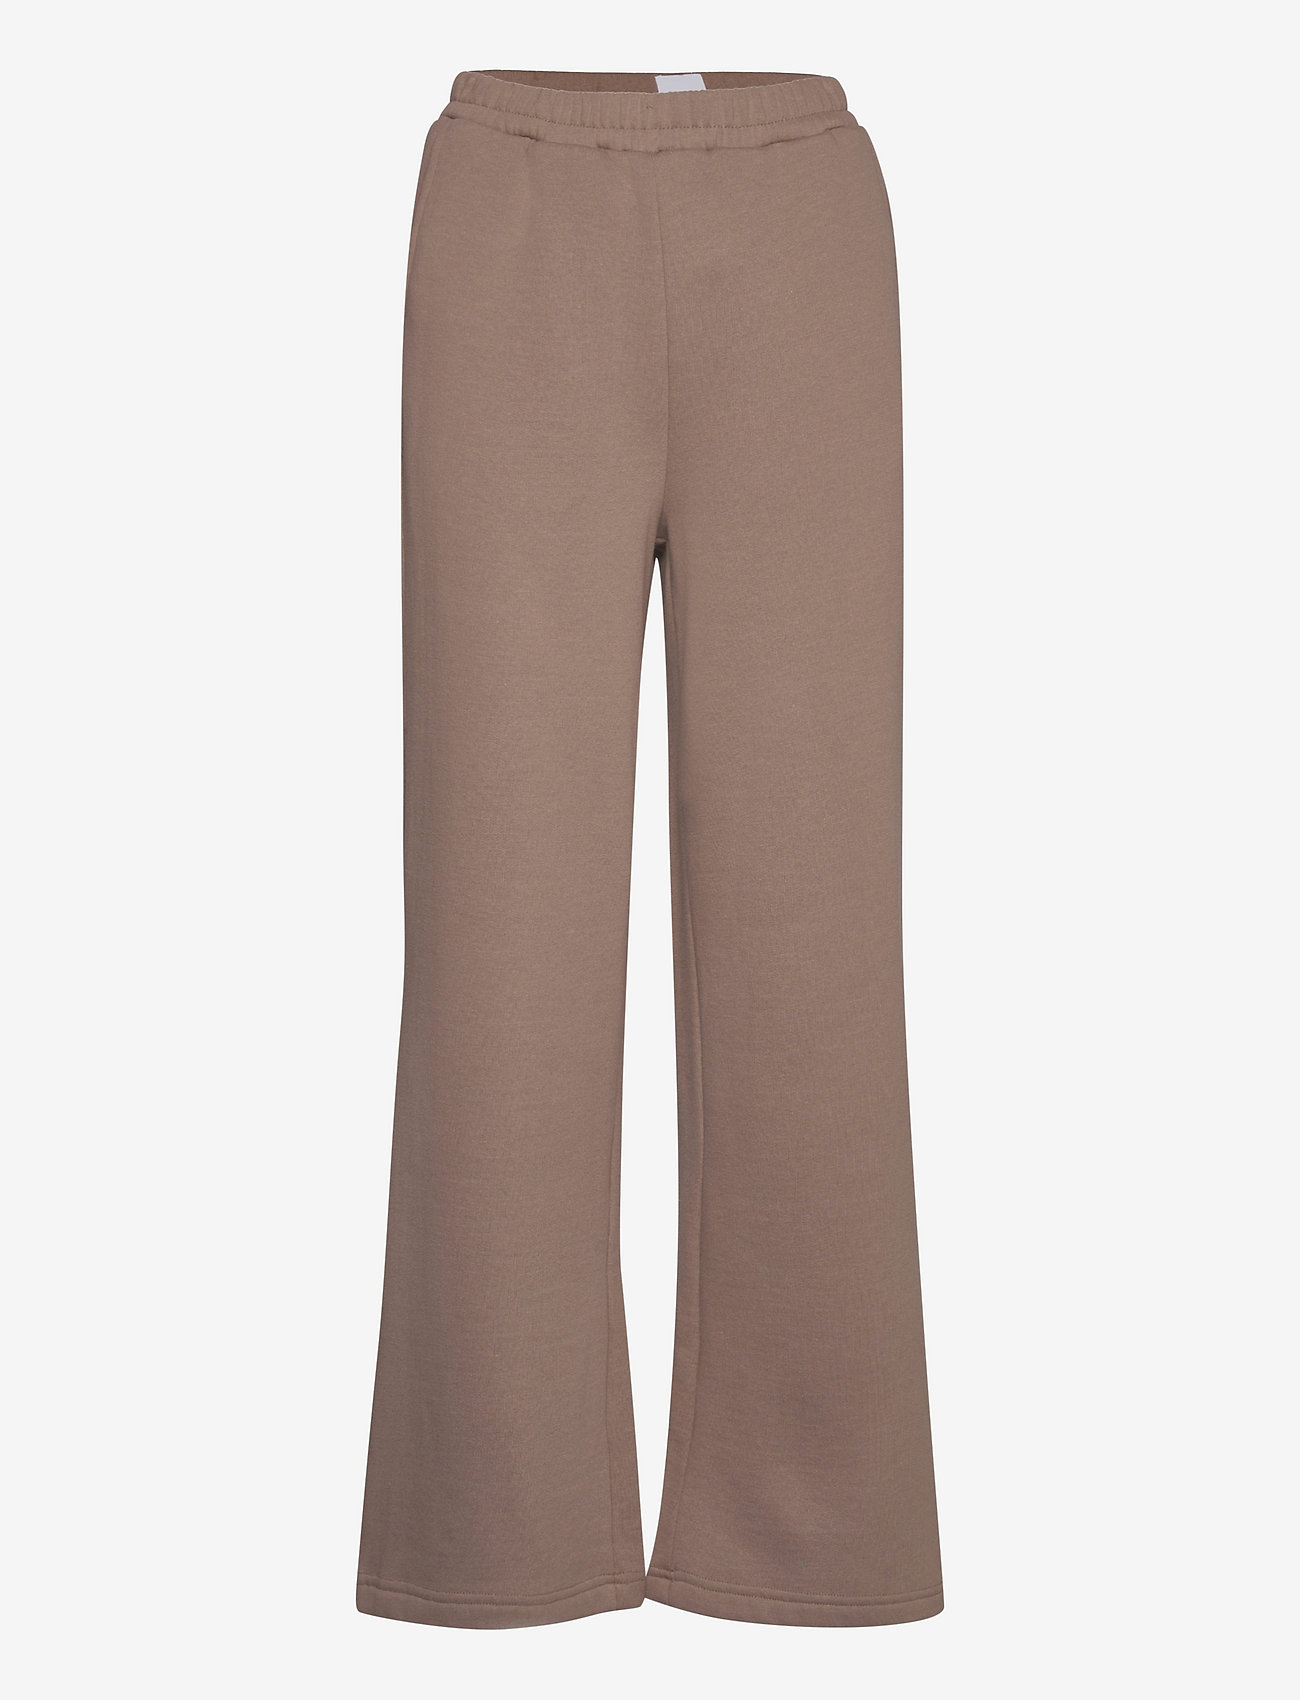 hálo - TUNDRA woolen wide college pants - jogos kelnės - sand - 0